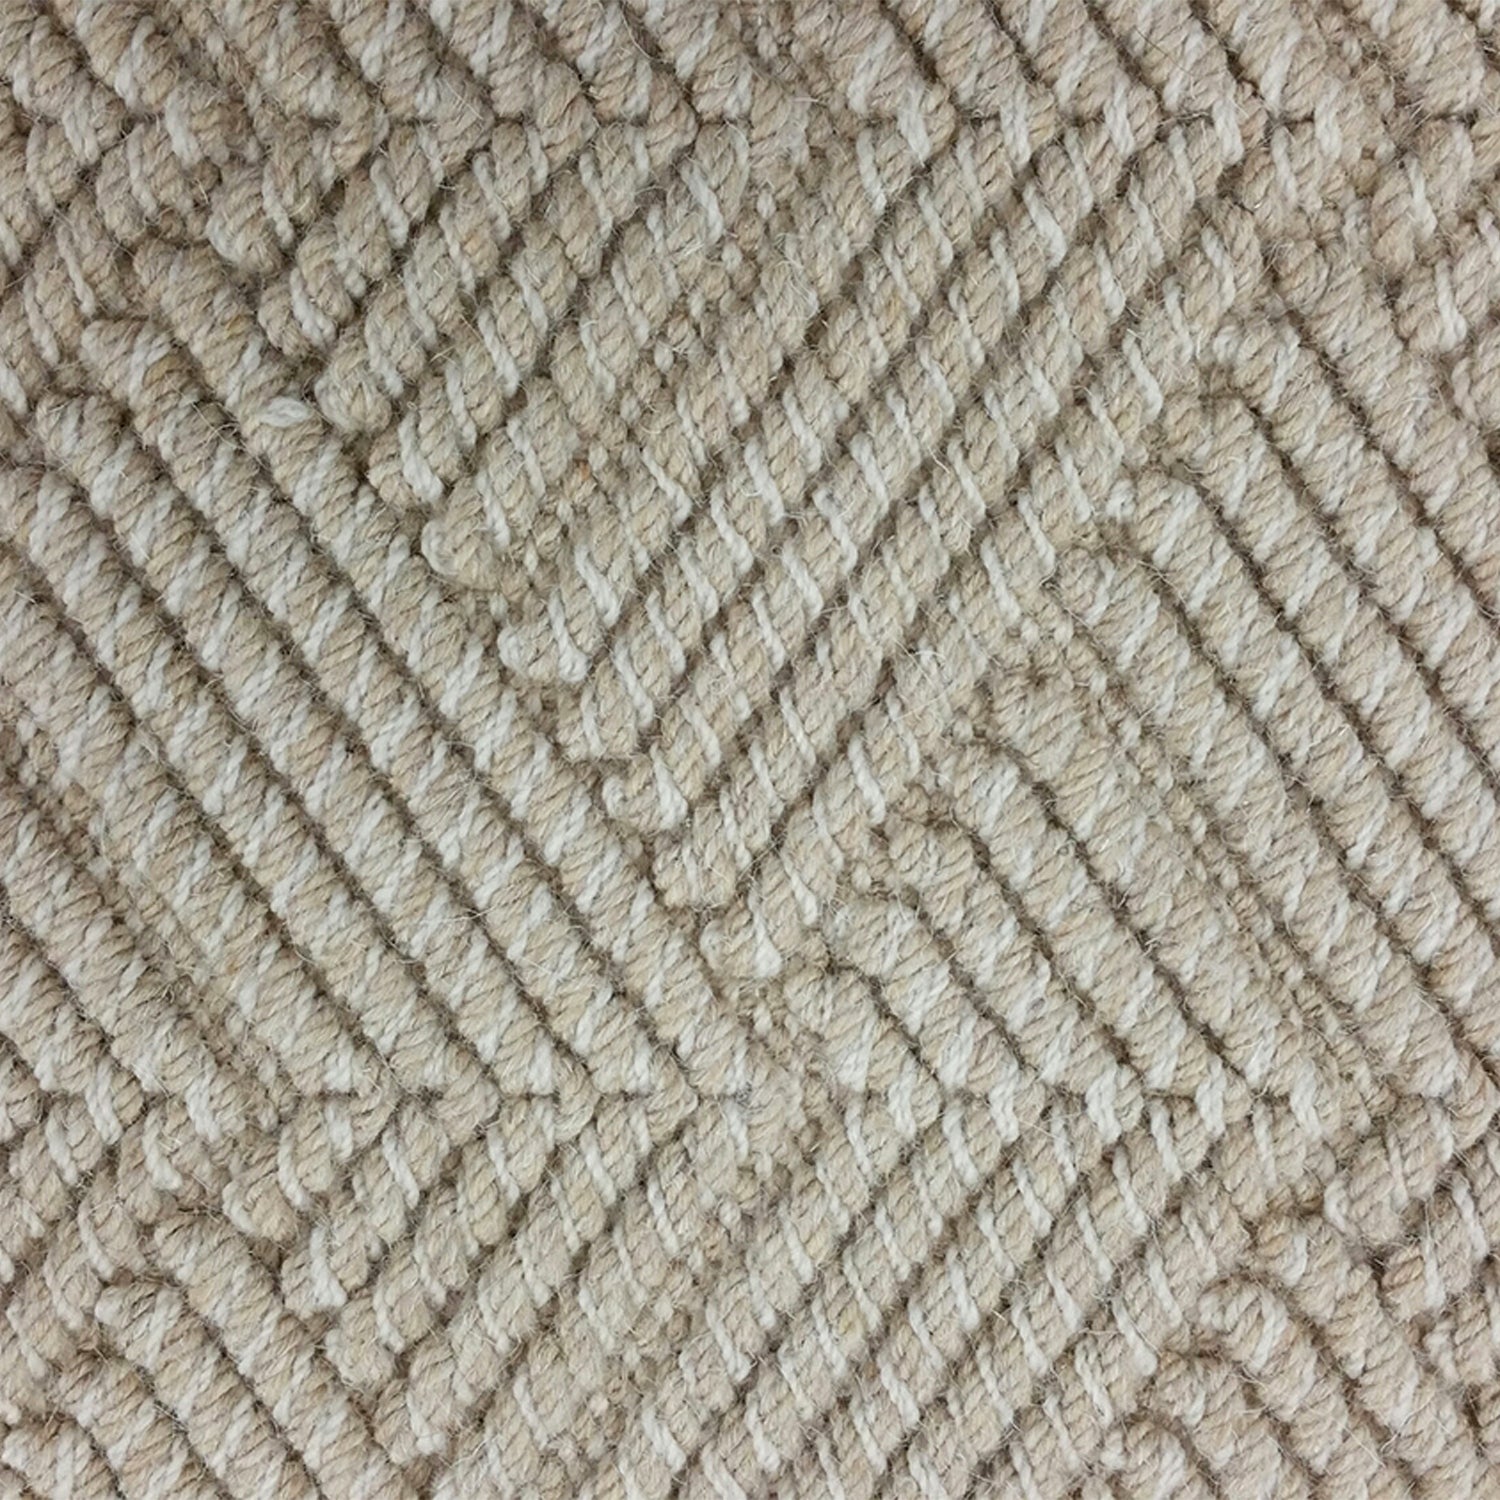 Wool broadloom carpet swatch in a high-pile chevron weave in tan.